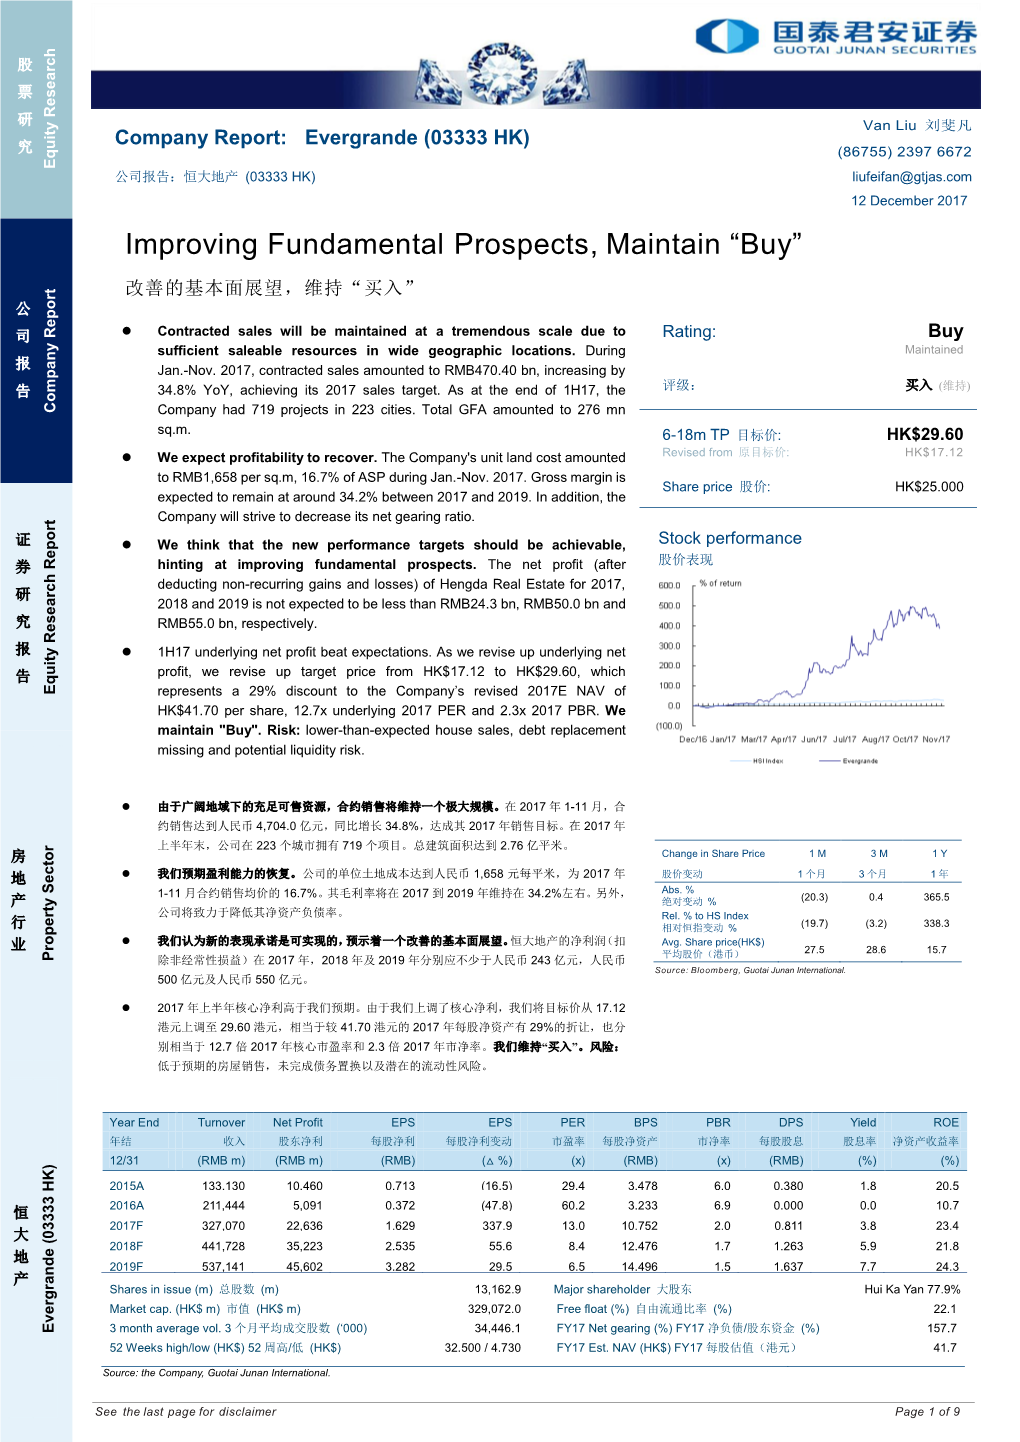 Improving Fundamental Prospects, Maintain “Buy”